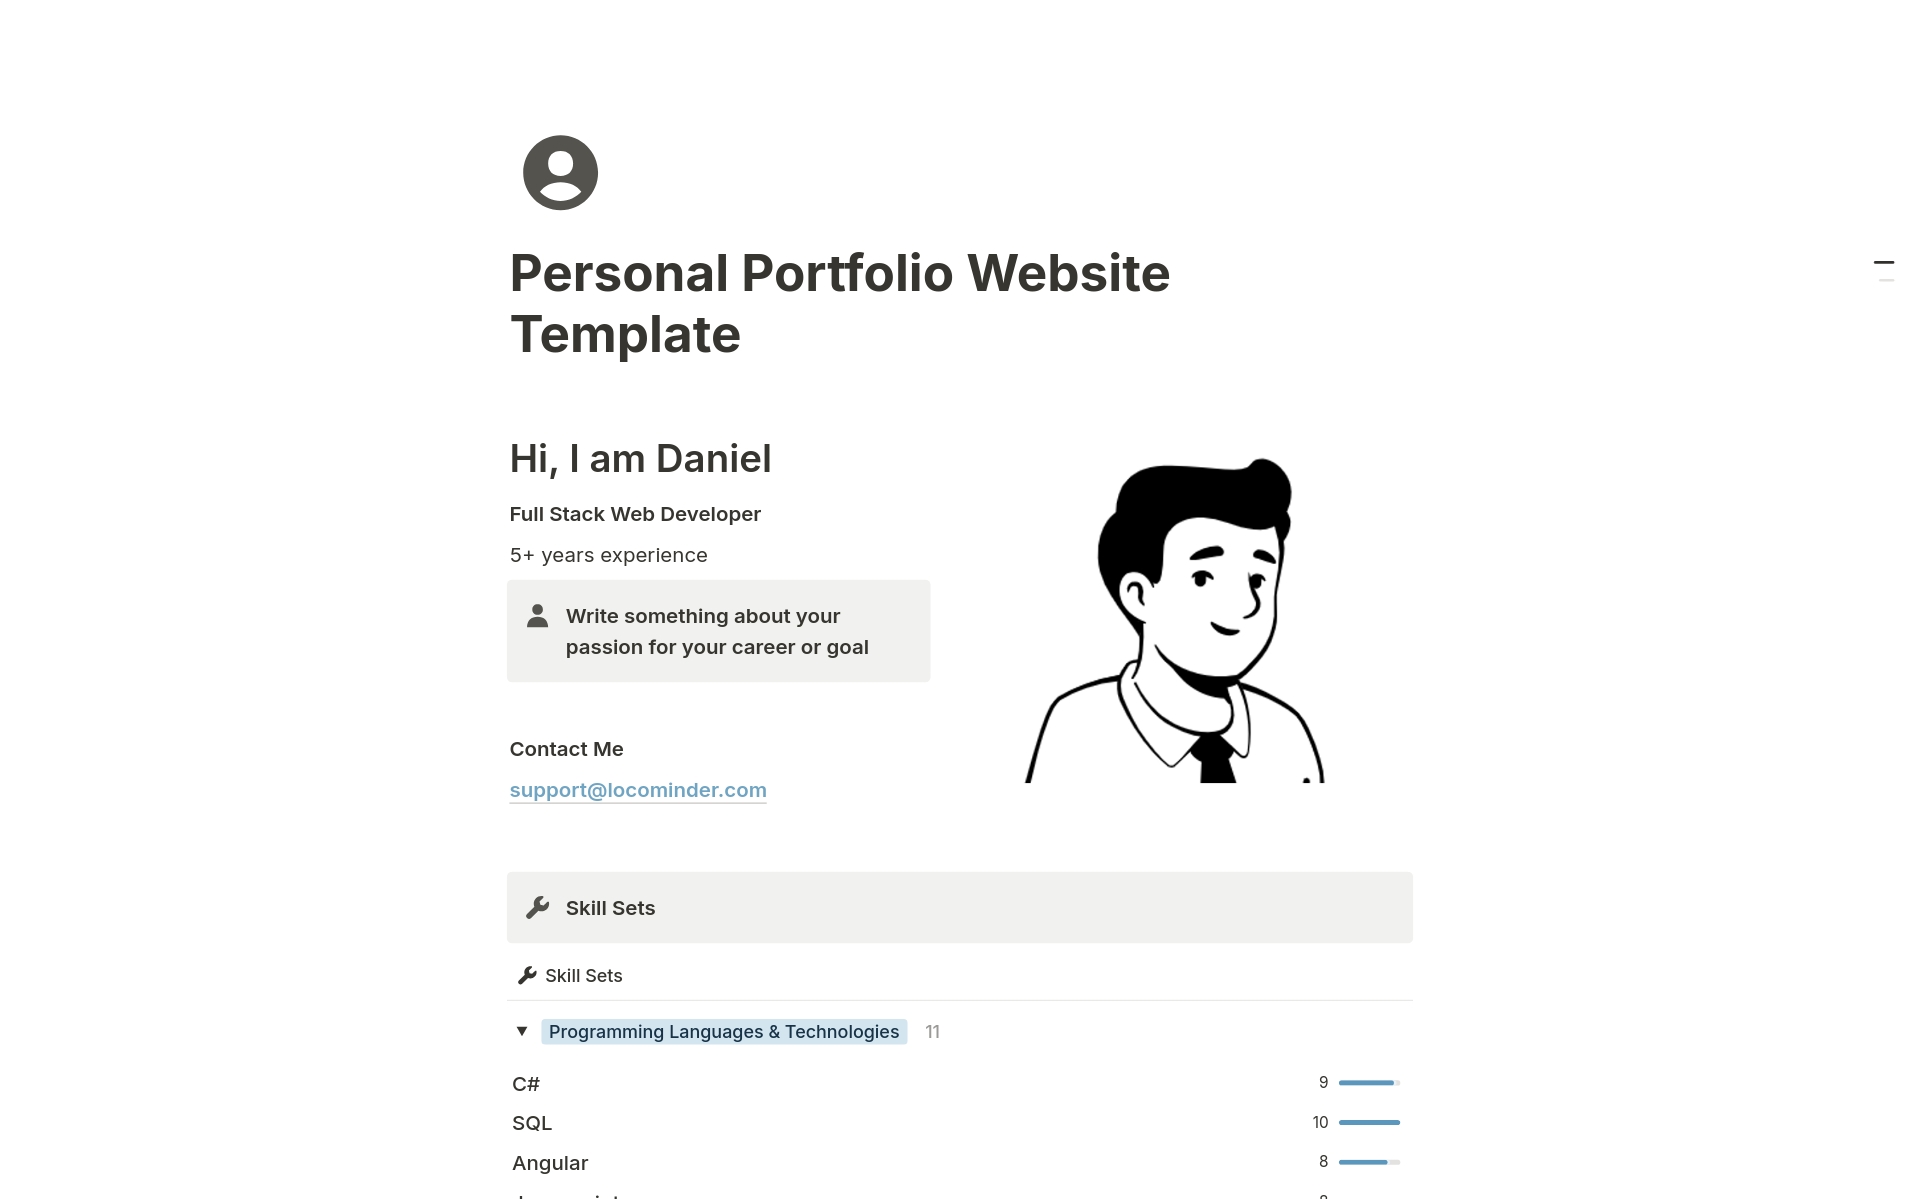 Presenting the Notion Personal Portfolio Website Template